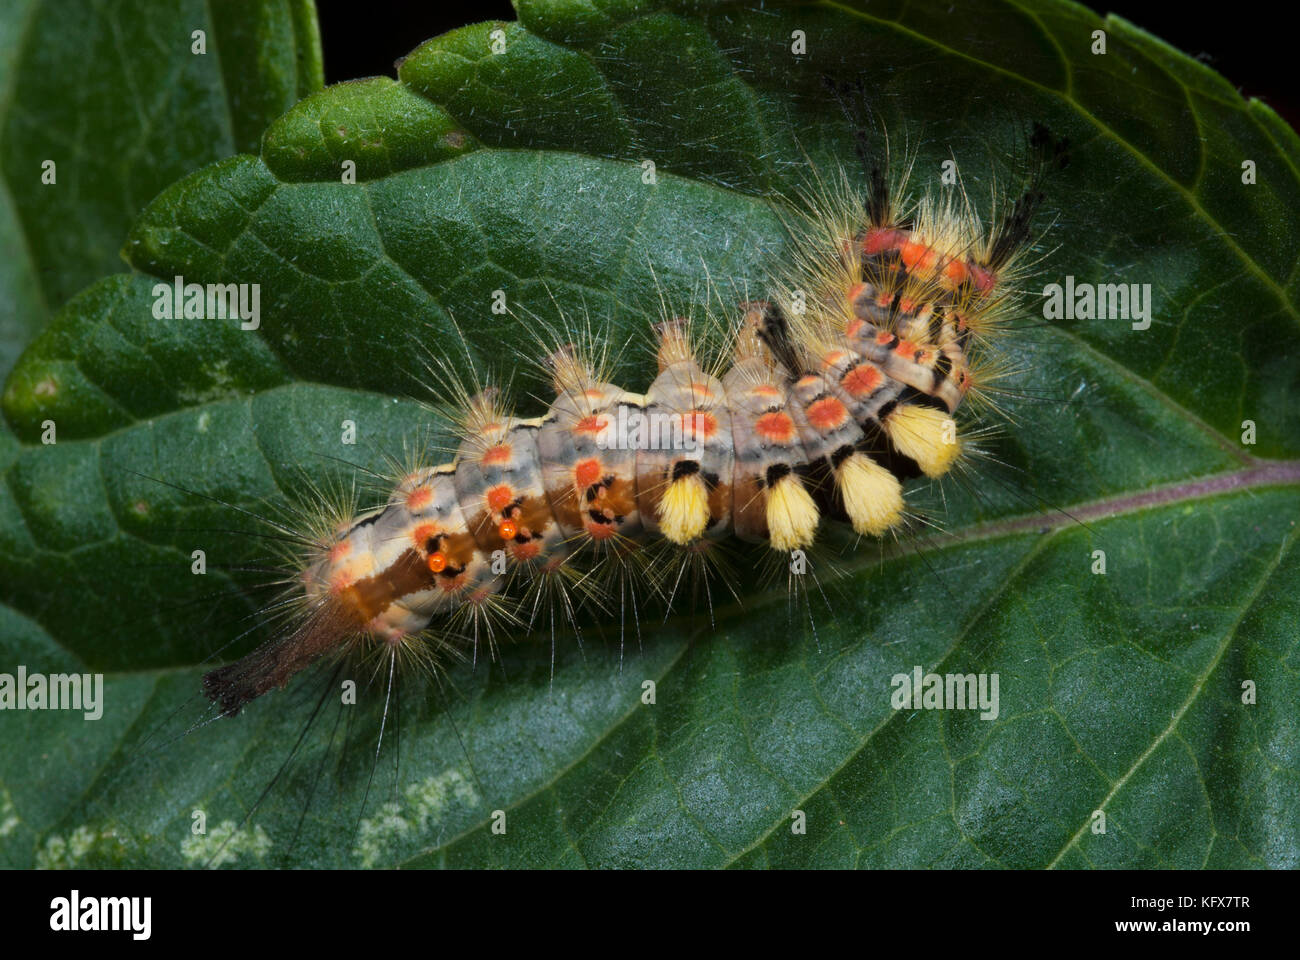 Vapourer Moth, Caterpillar, Orgyia antiqua, feeding on leaf, eating, tufts of hair on back, larvae, yellow, red, black Stock Photo